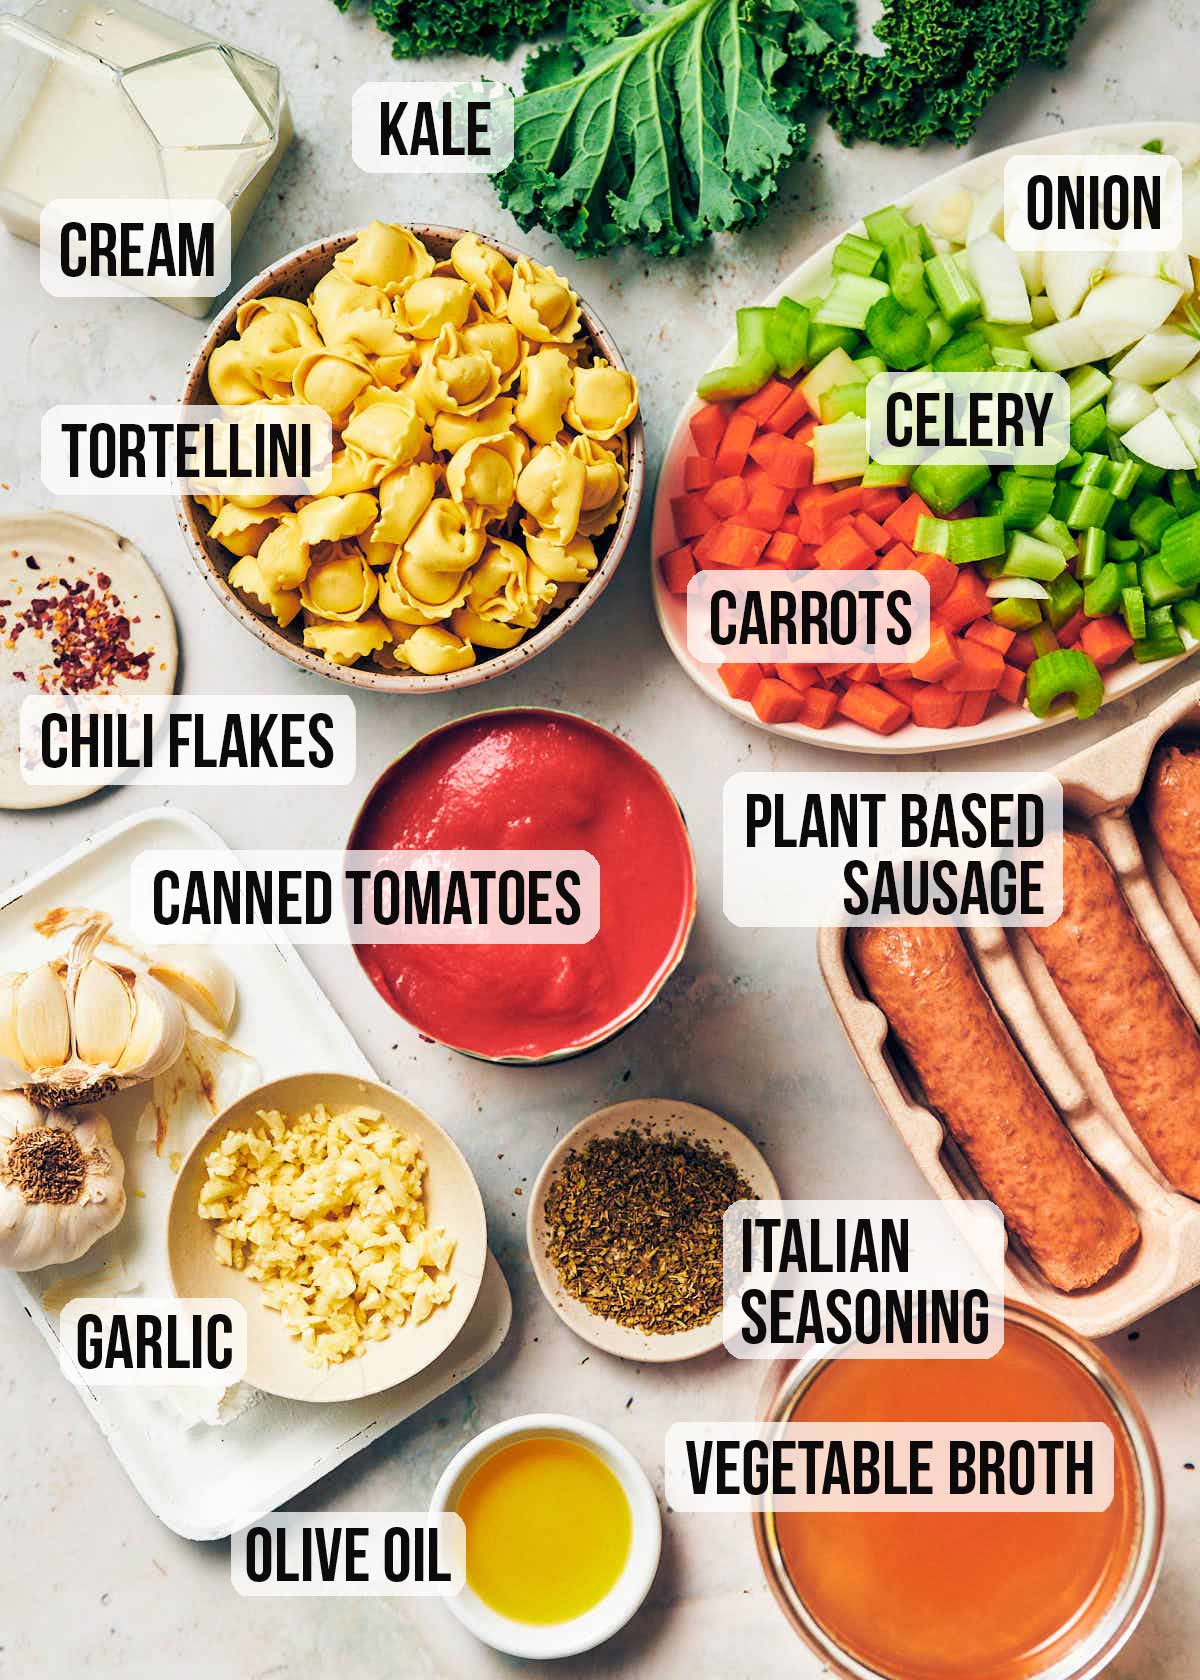 Ingredients to make vegetarian tortellini soup (tomatoes, sausage, carrots, celery, onion, garlic, stock, Italian seasoning).